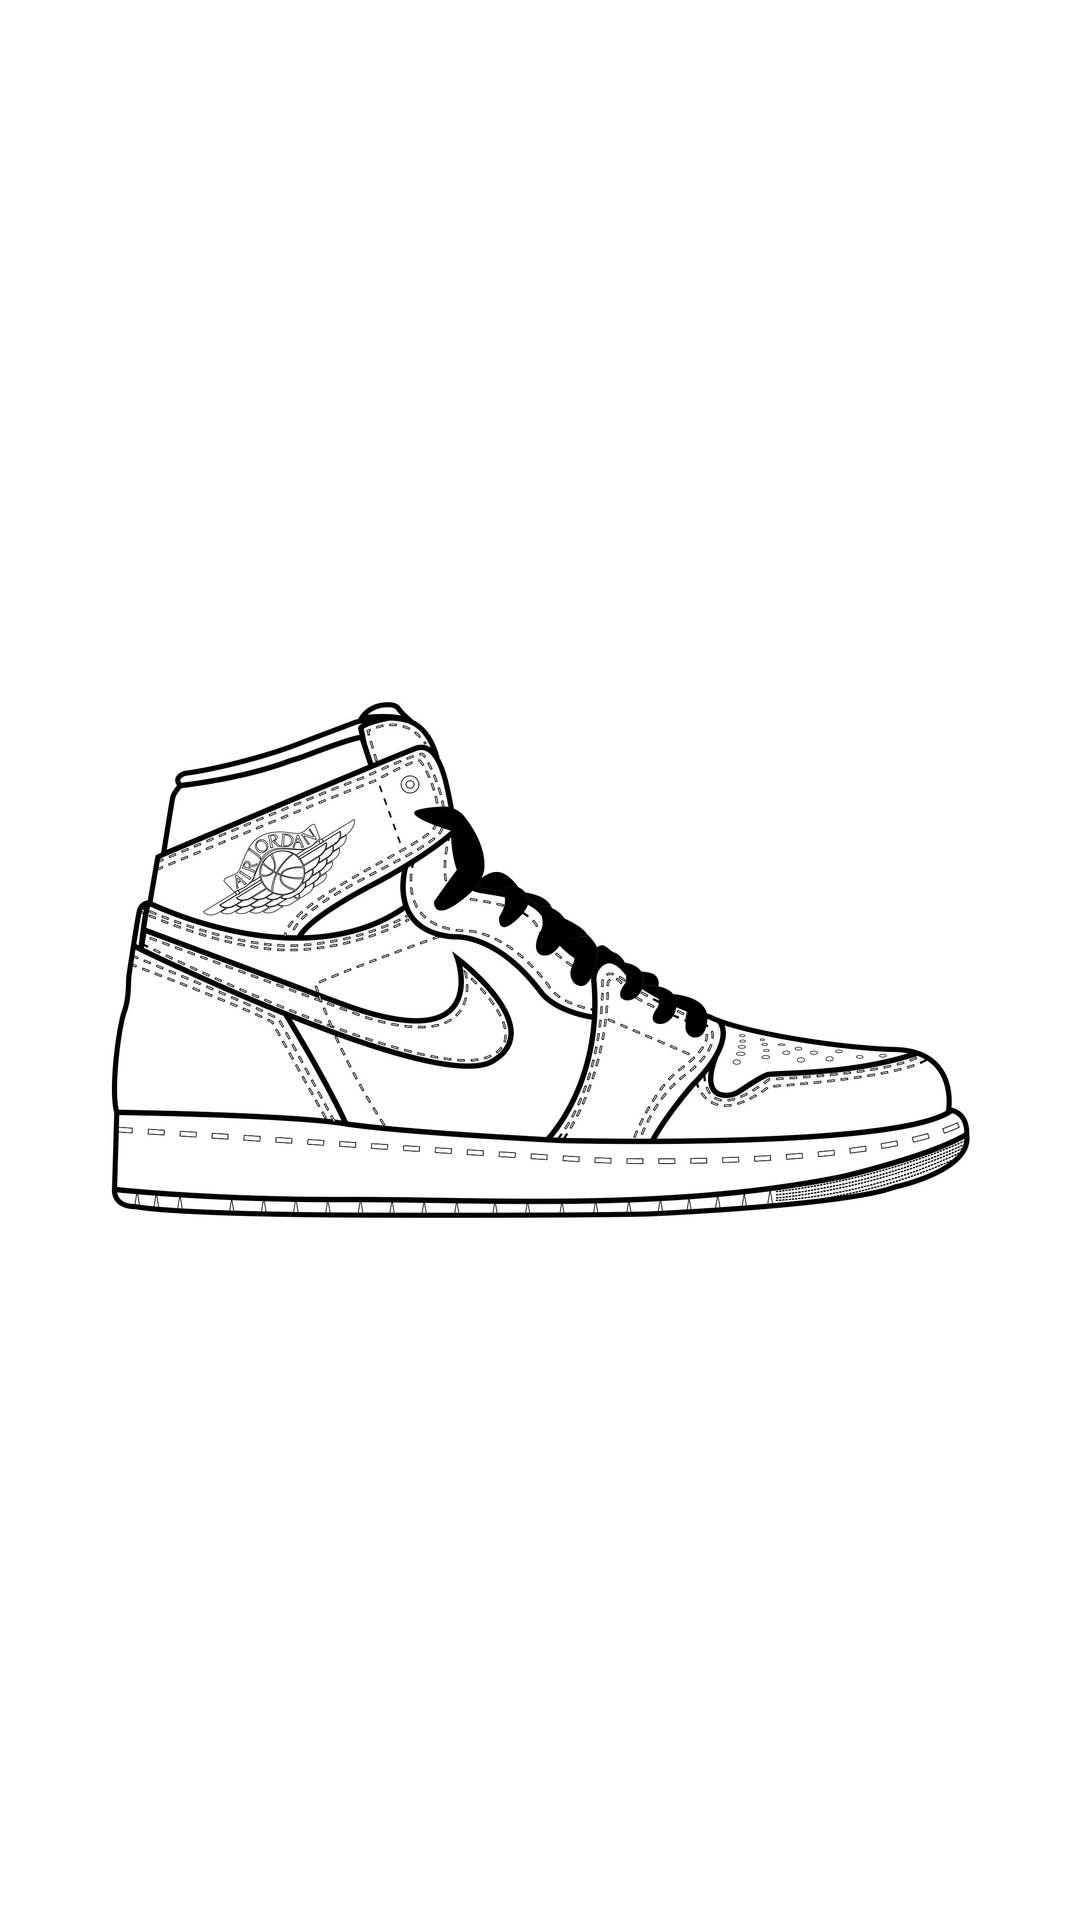 "Iconic Minimalistic Illustration of Nike Jordan 1 Sneakers" Wallpaper